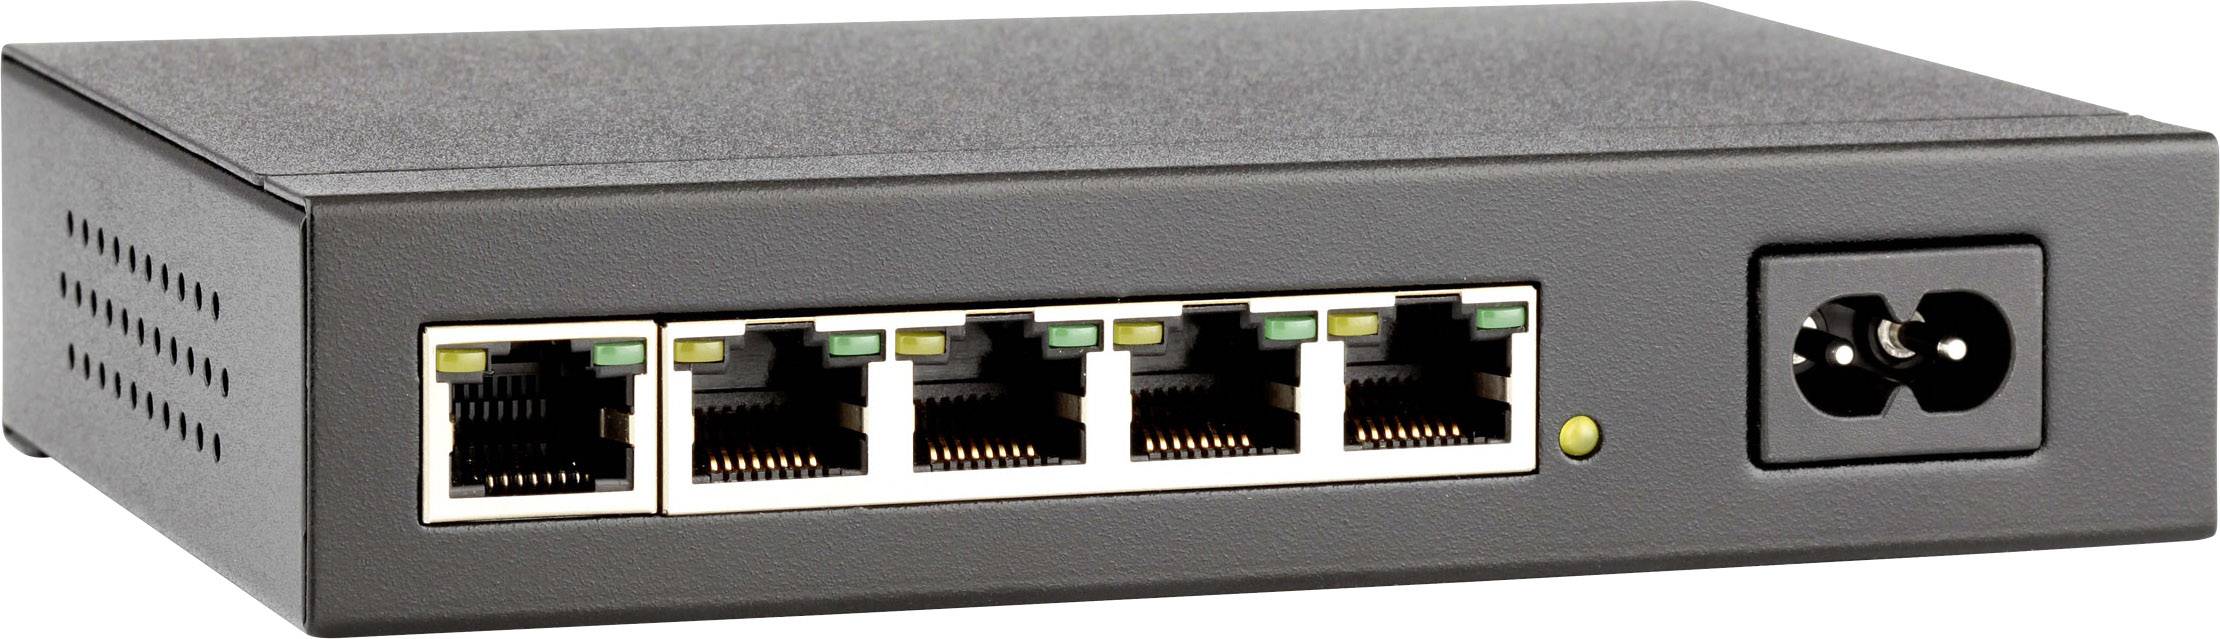 CONRAD Renkforce Netzwerk Switch RJ45 5 Port 1 Gbit/s